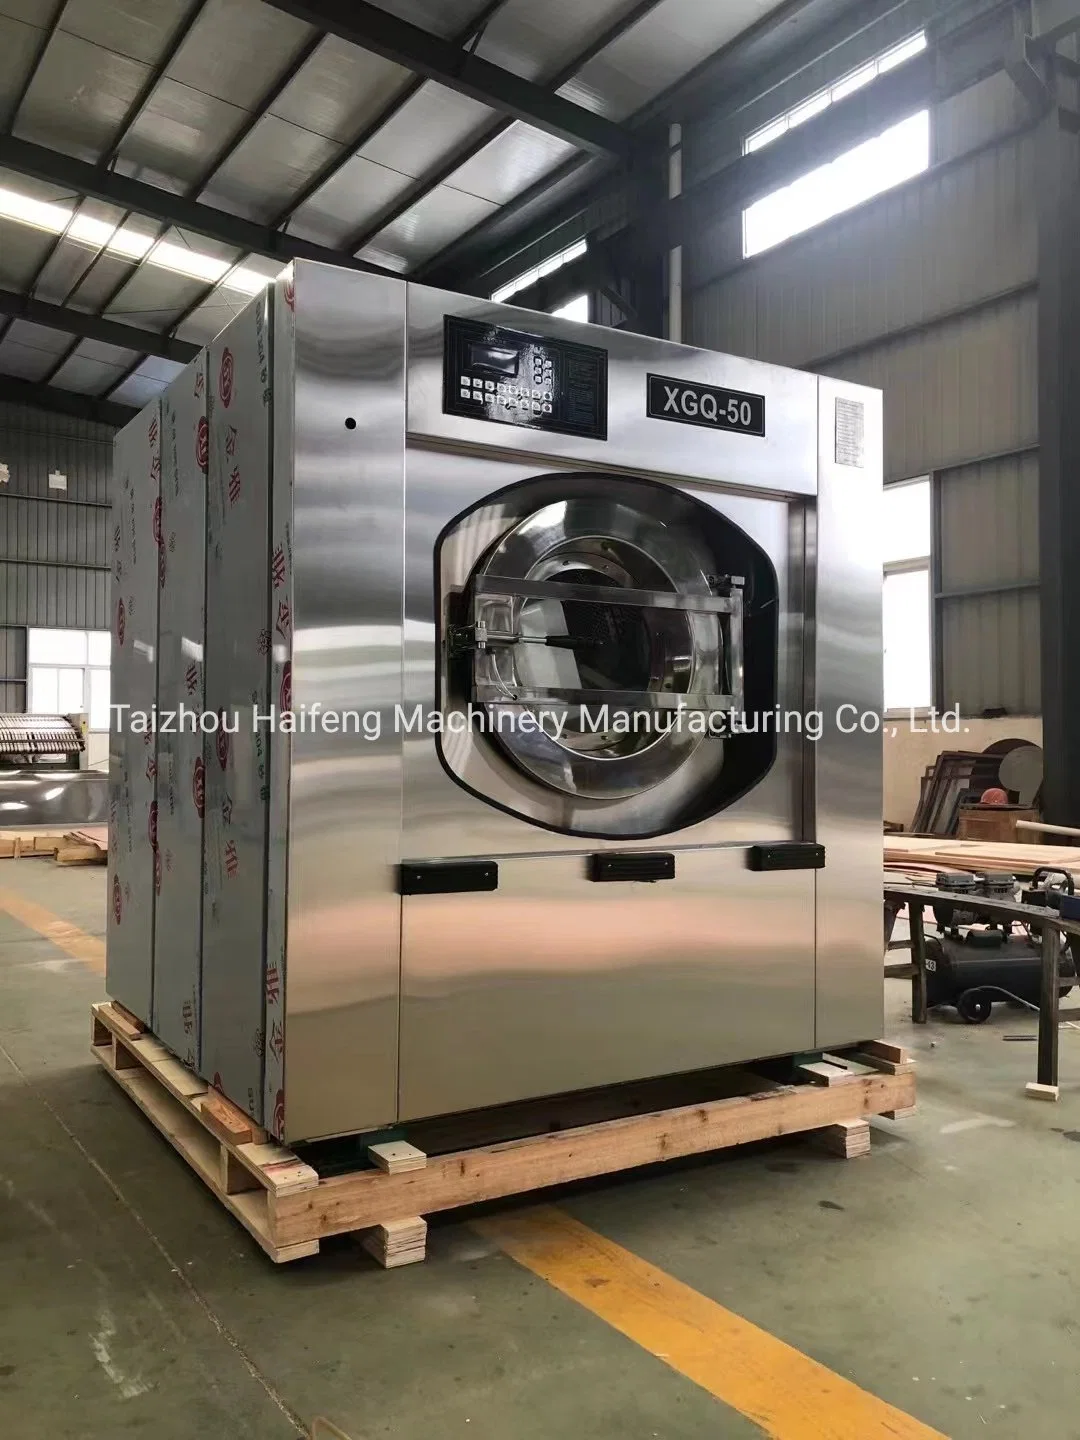 Máquina de lavar automática para limpeza industrial e comercial de 50 kg.